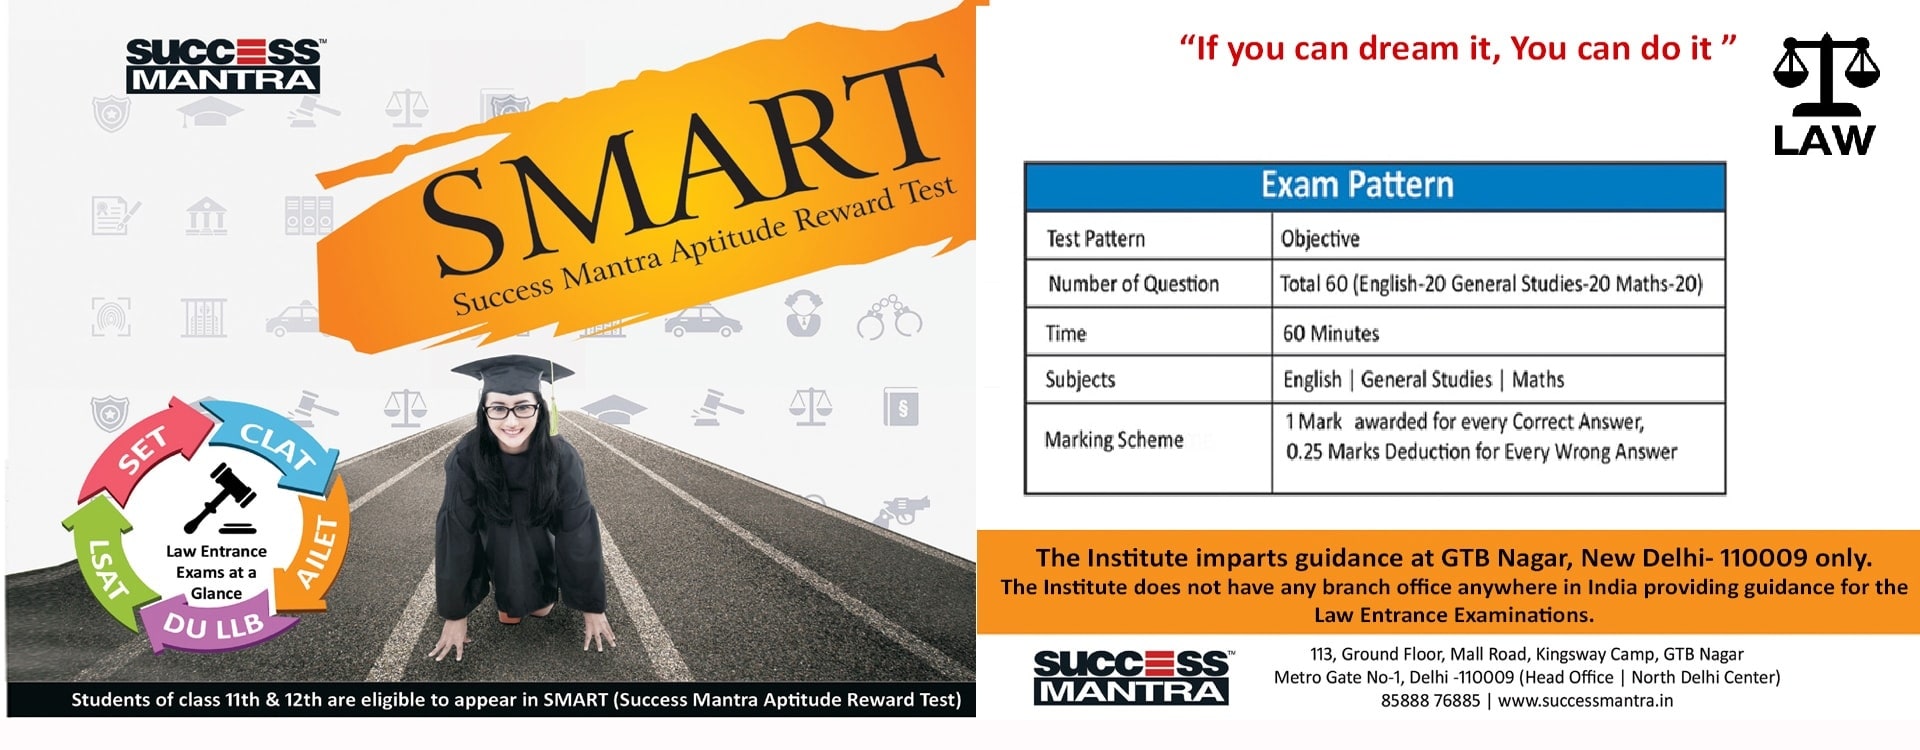 SMART_Success_Mantra_APtitude_Reward_Test_2019_Scholarship_Test1.JPG